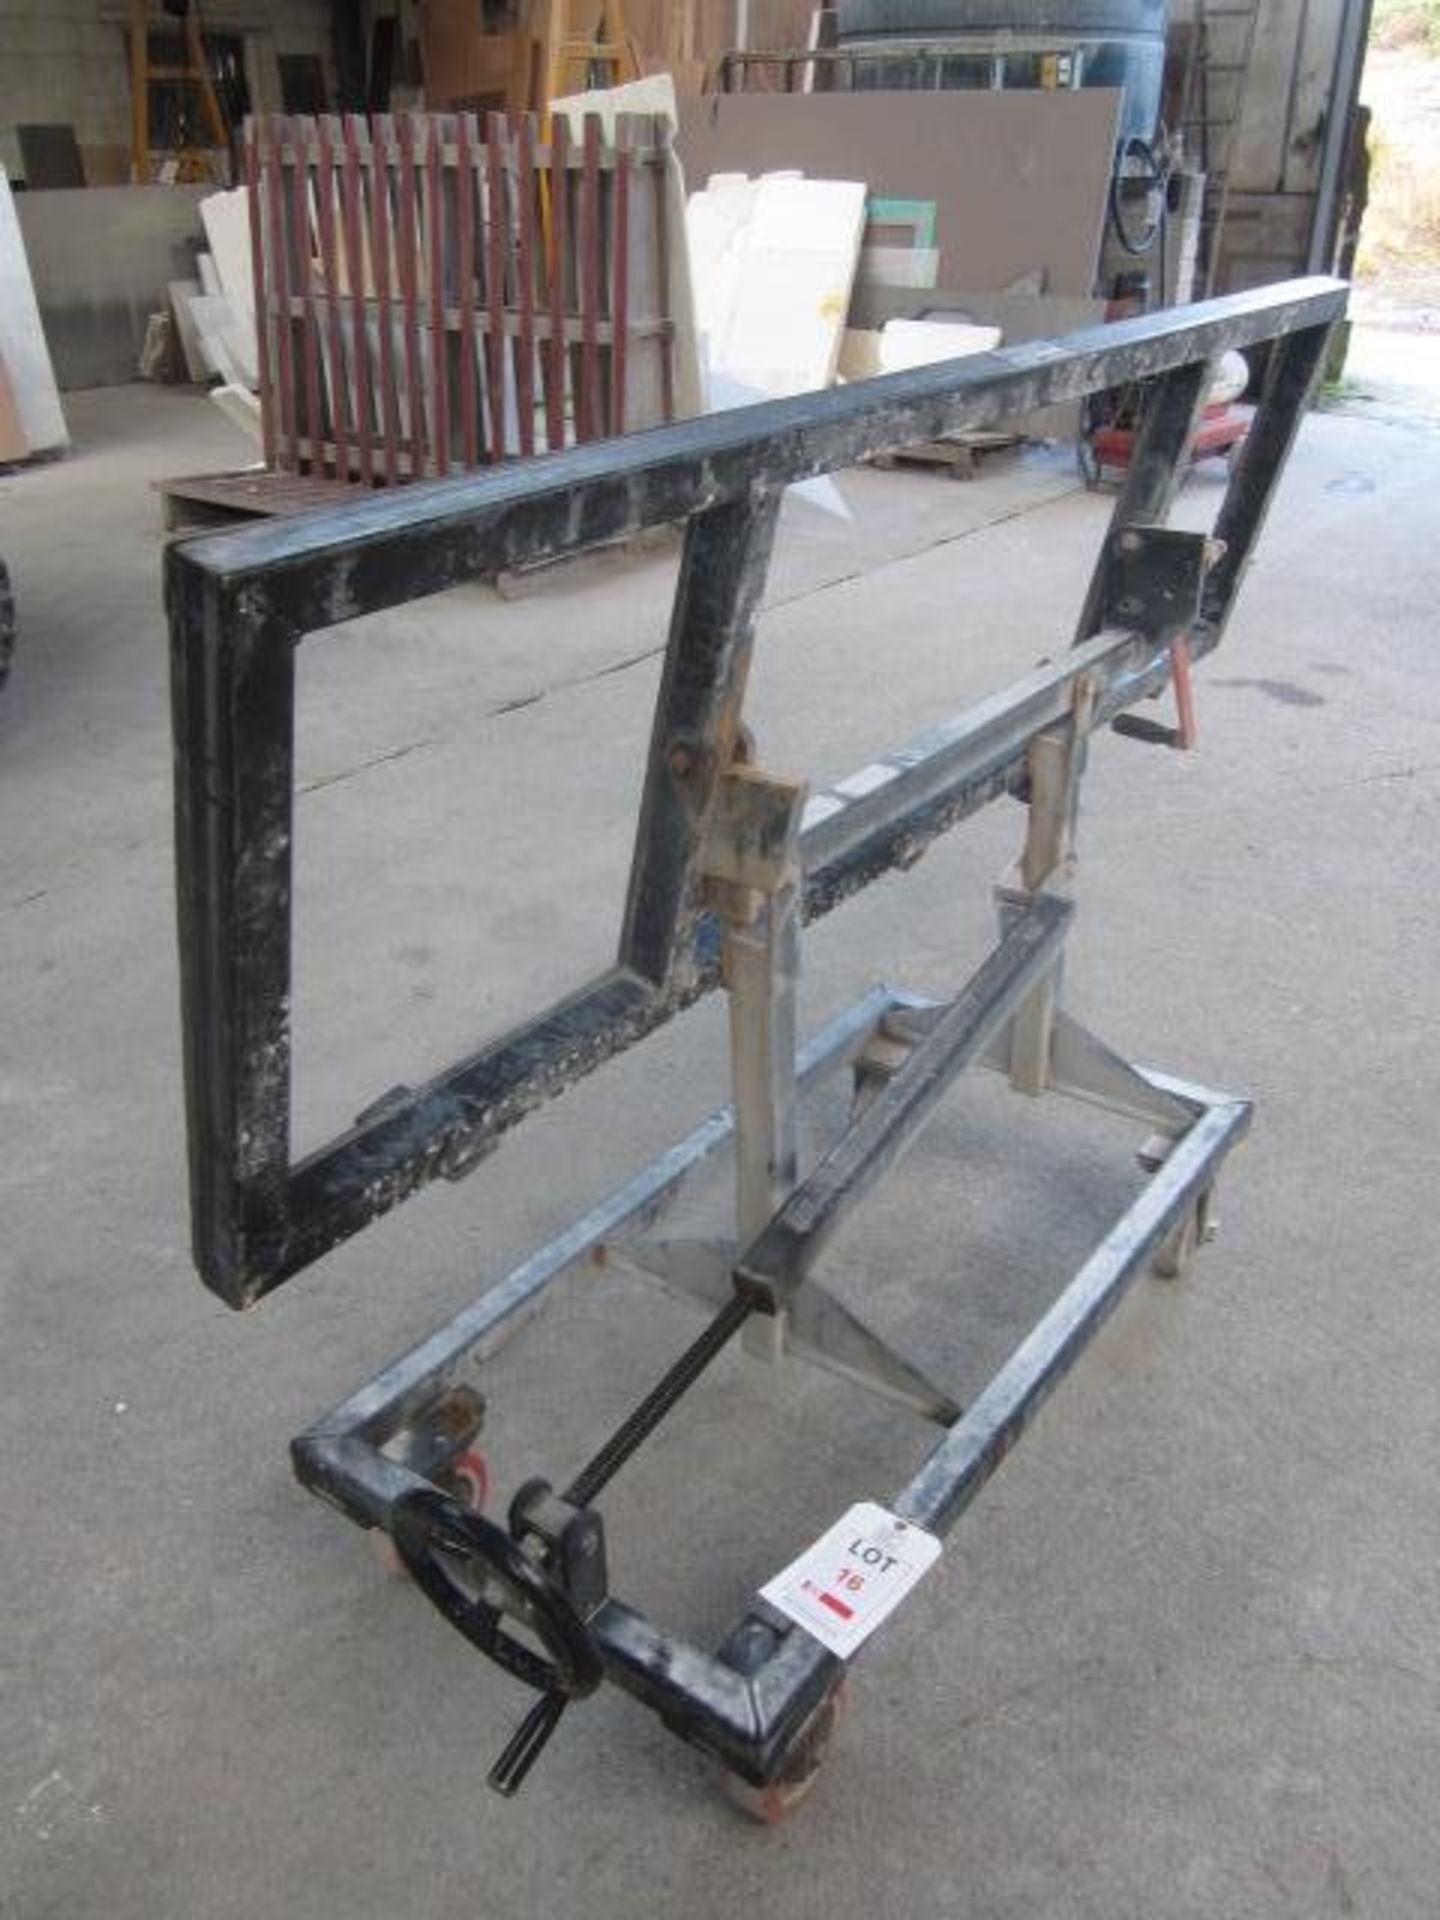 Steel framed slab trolley with adjustable lift and tilt table